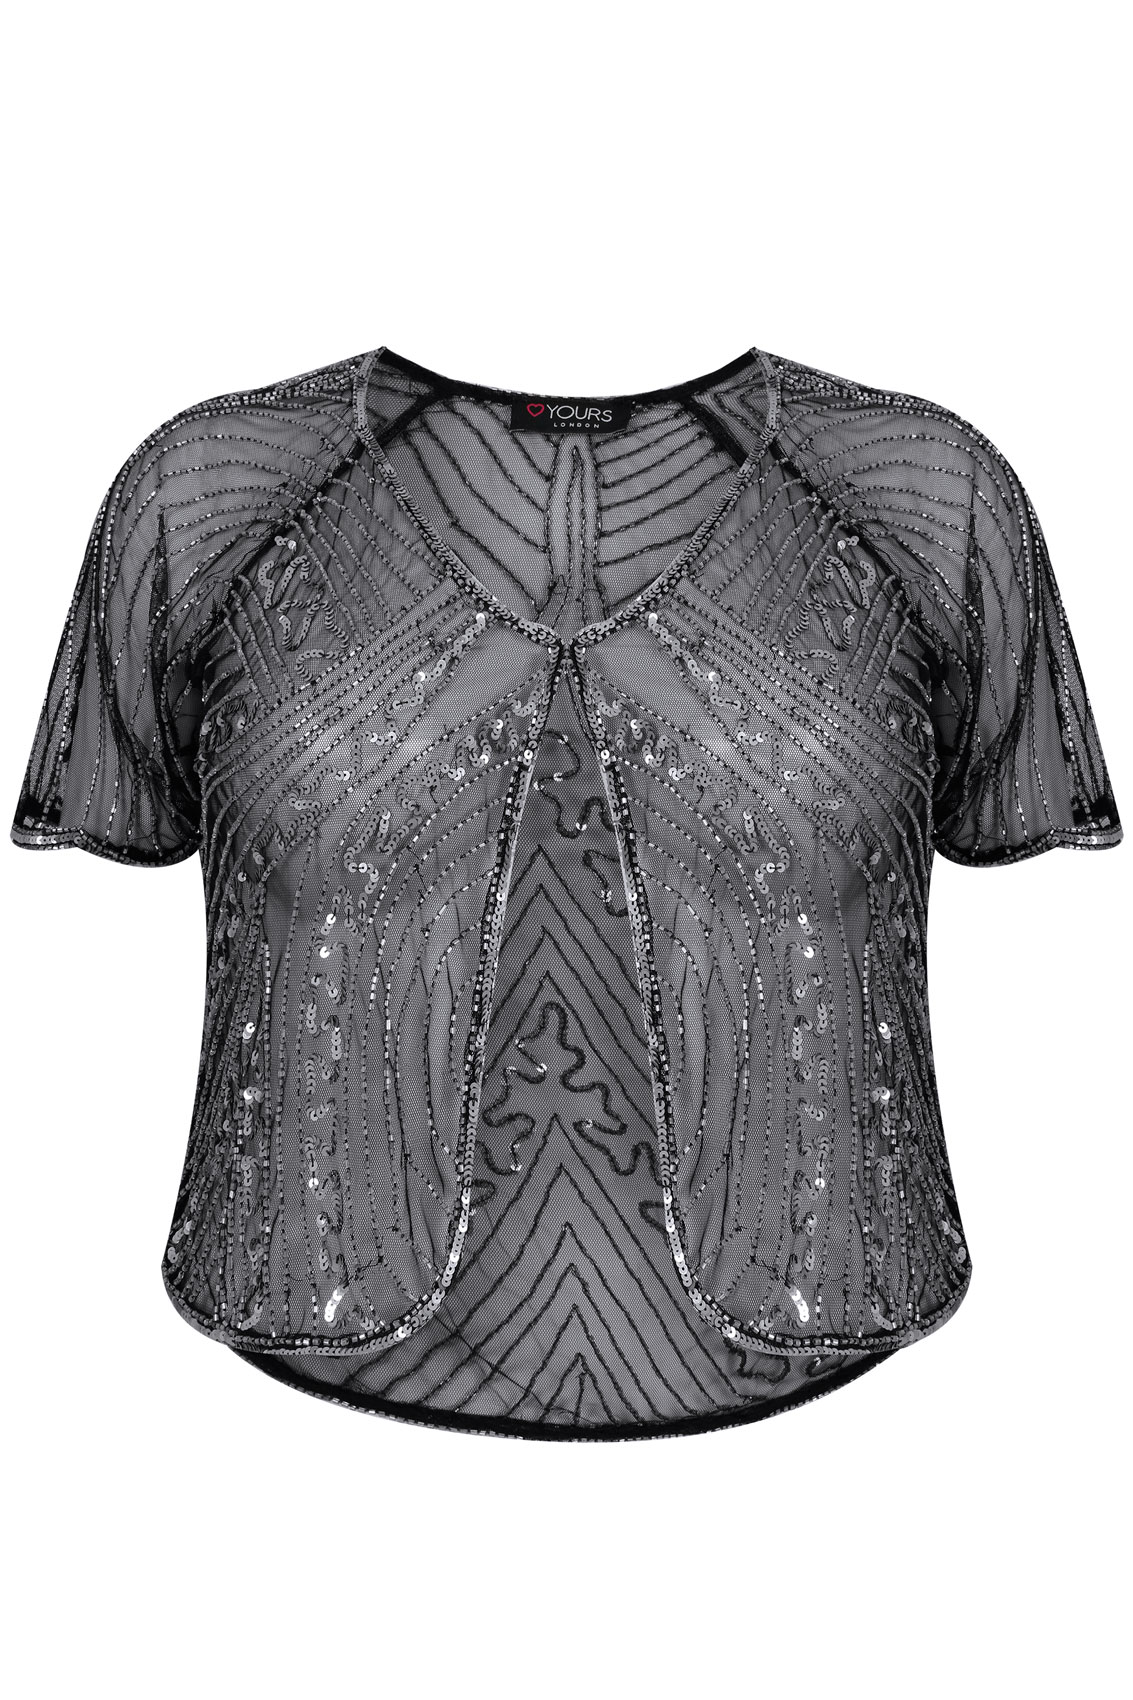 Black & Silver Embellished Sequin Shrug With Curved Hem, Plus Size 16 to 32